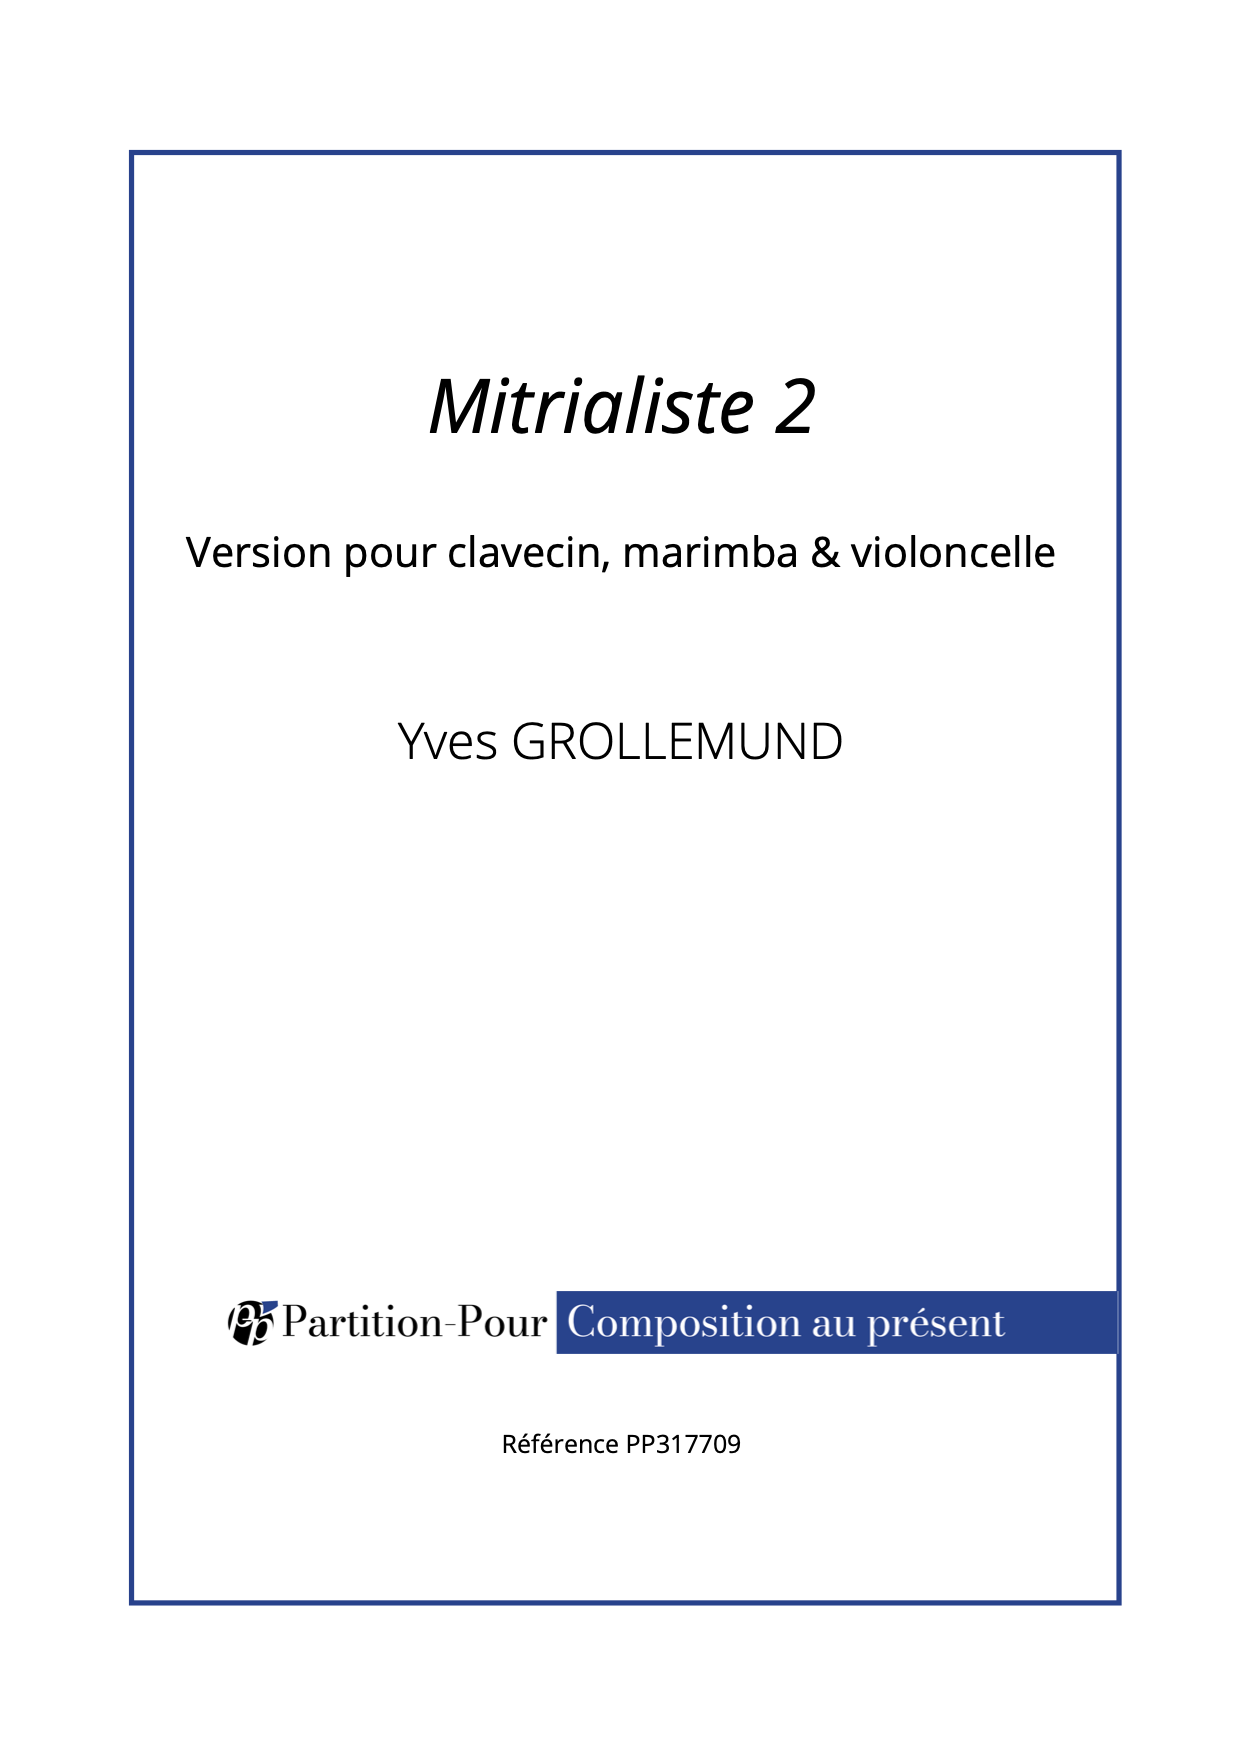 PP317709 - Grollemund Y - Mitrialiste 2 - clavecin marimba violoncelle -présentation